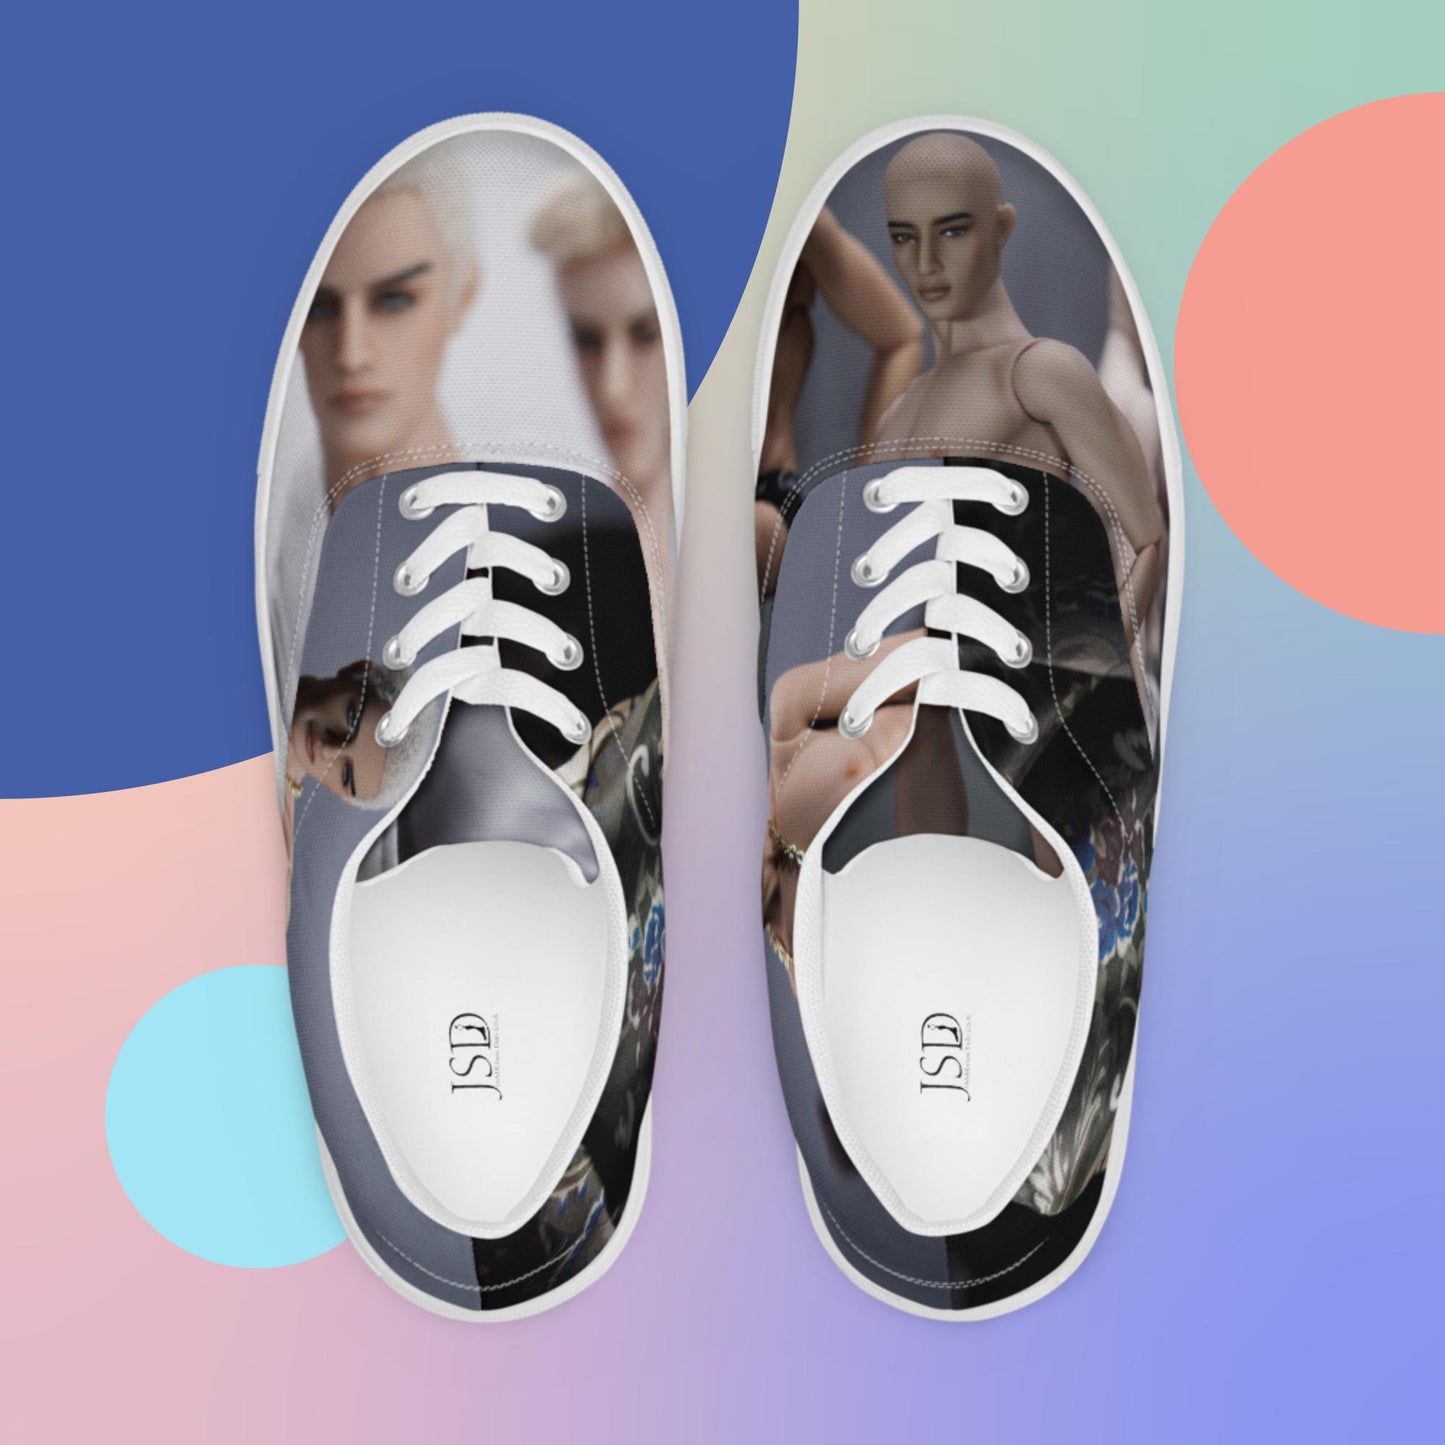 JAMIEshow Women’s lace-up canvas shoes